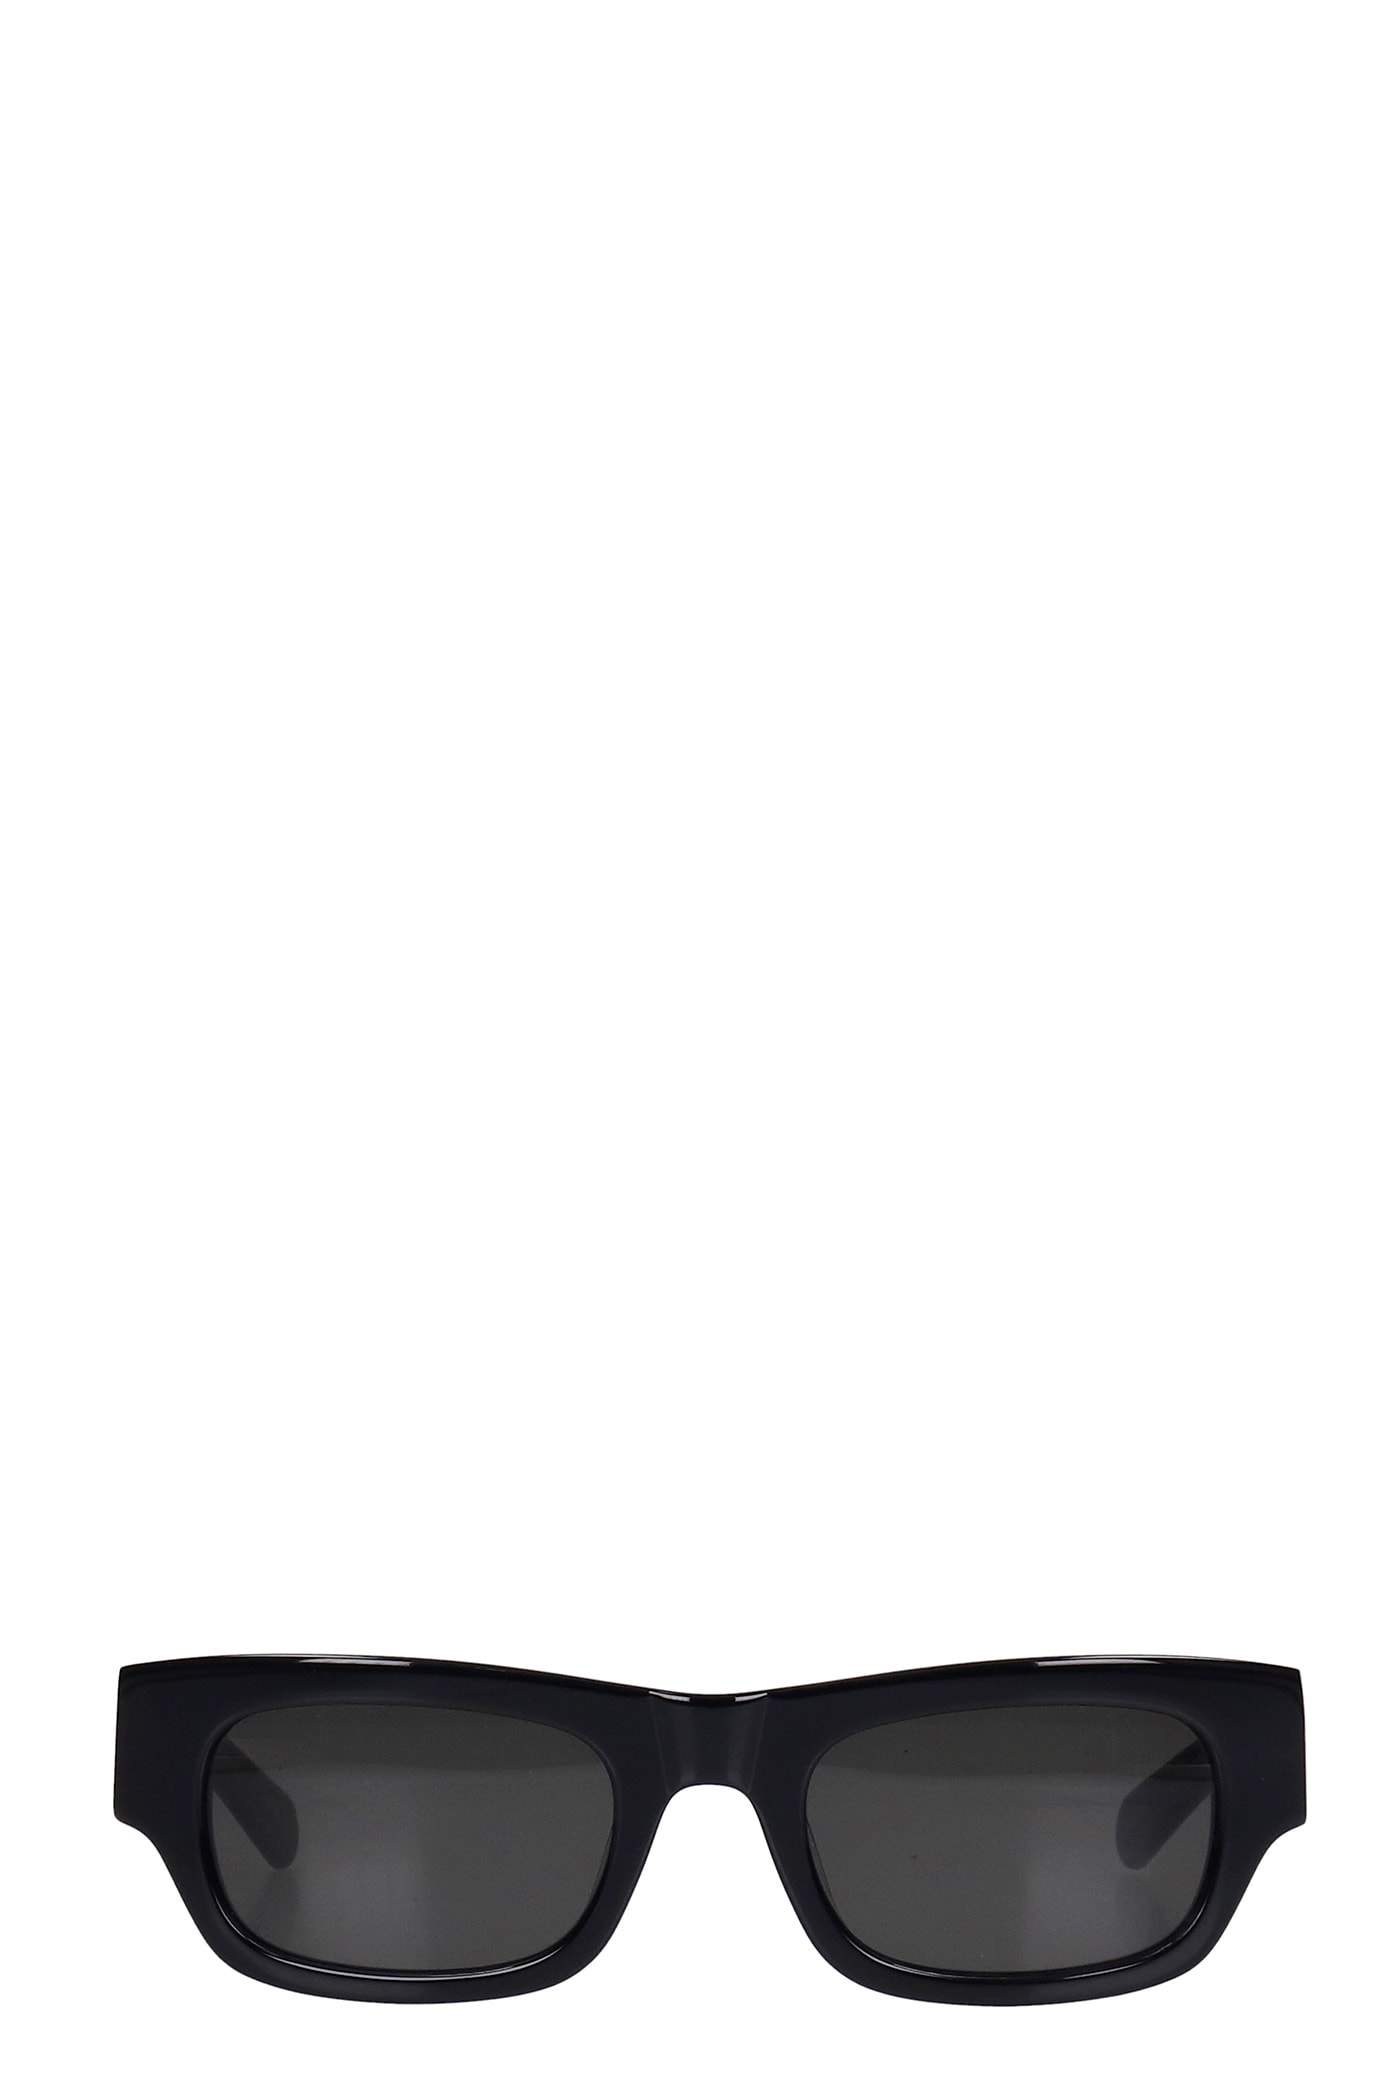 FLATLIST FRANKY SUNGLASSES IN BLACK PVC,11905066